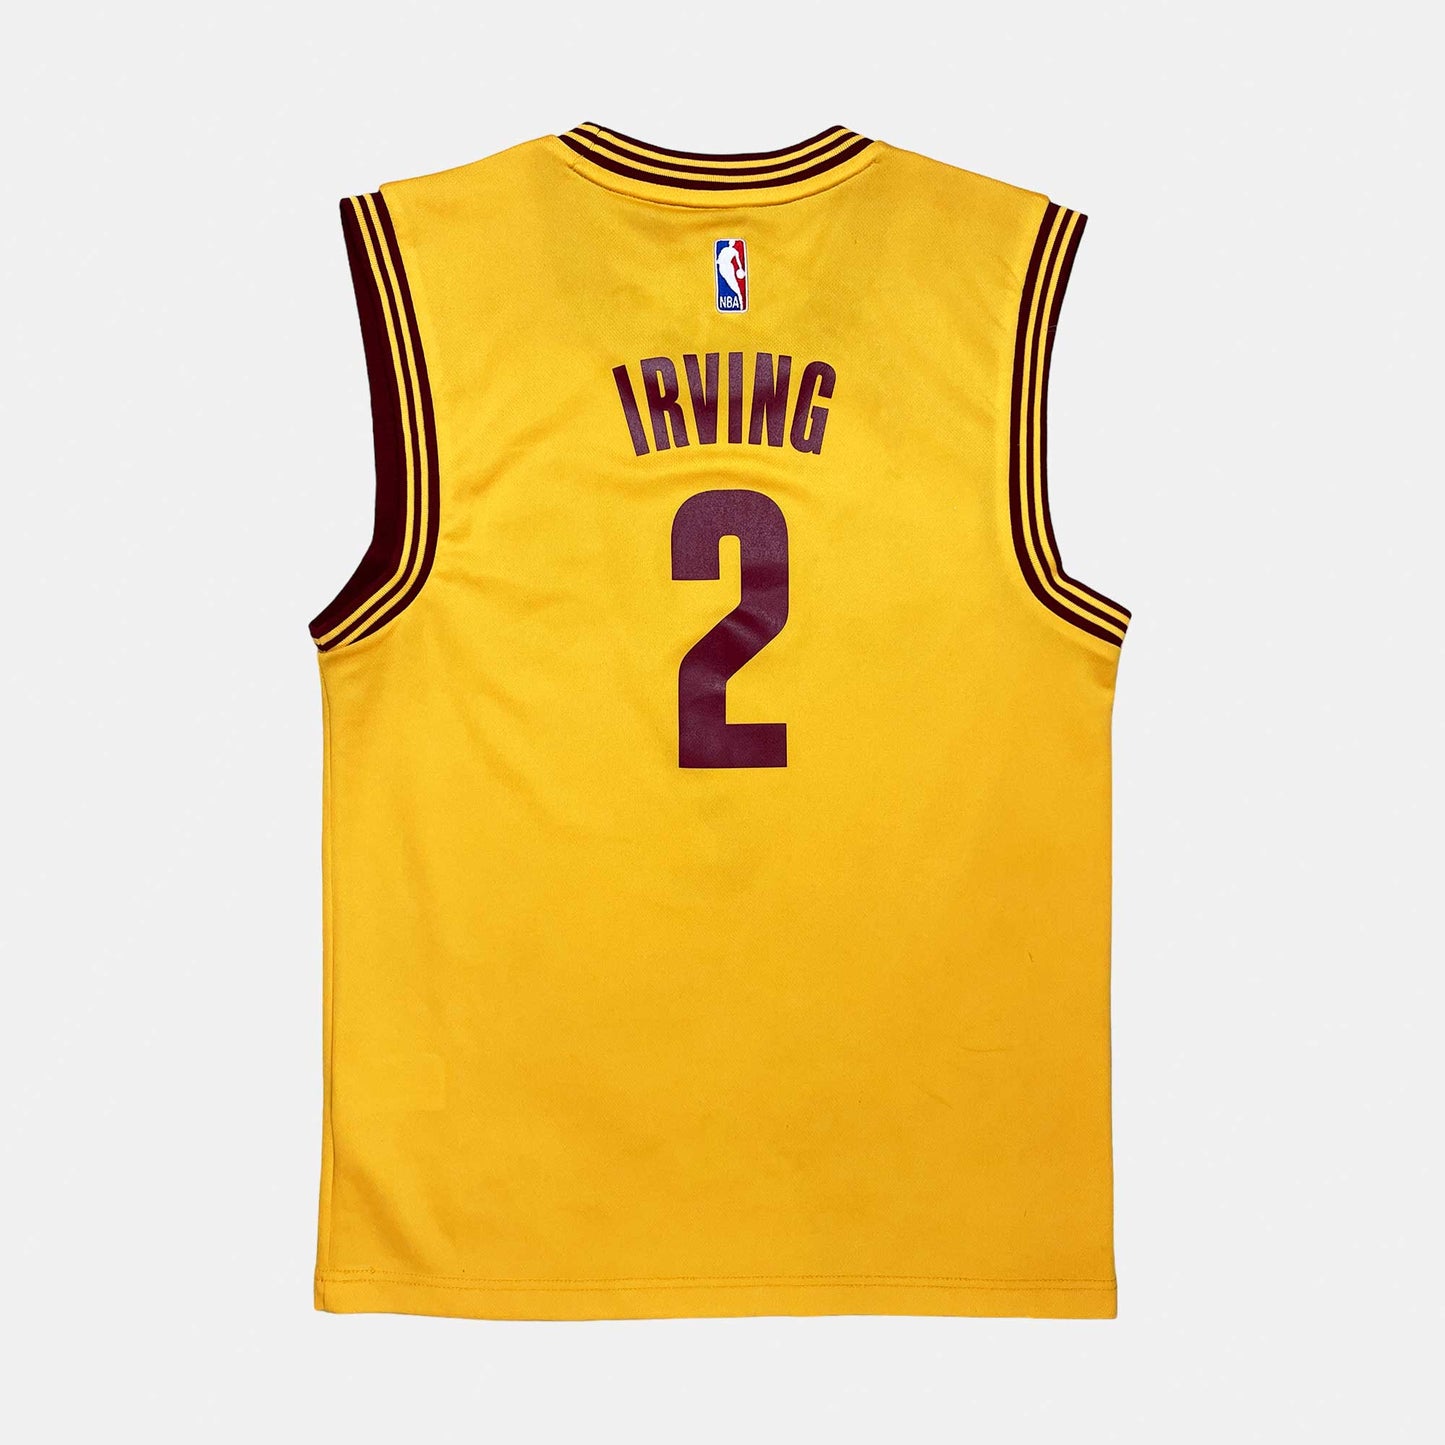 Cleveland Cavaliers - Kyrie Irving - Größe S - Adidas - NBA Trikot